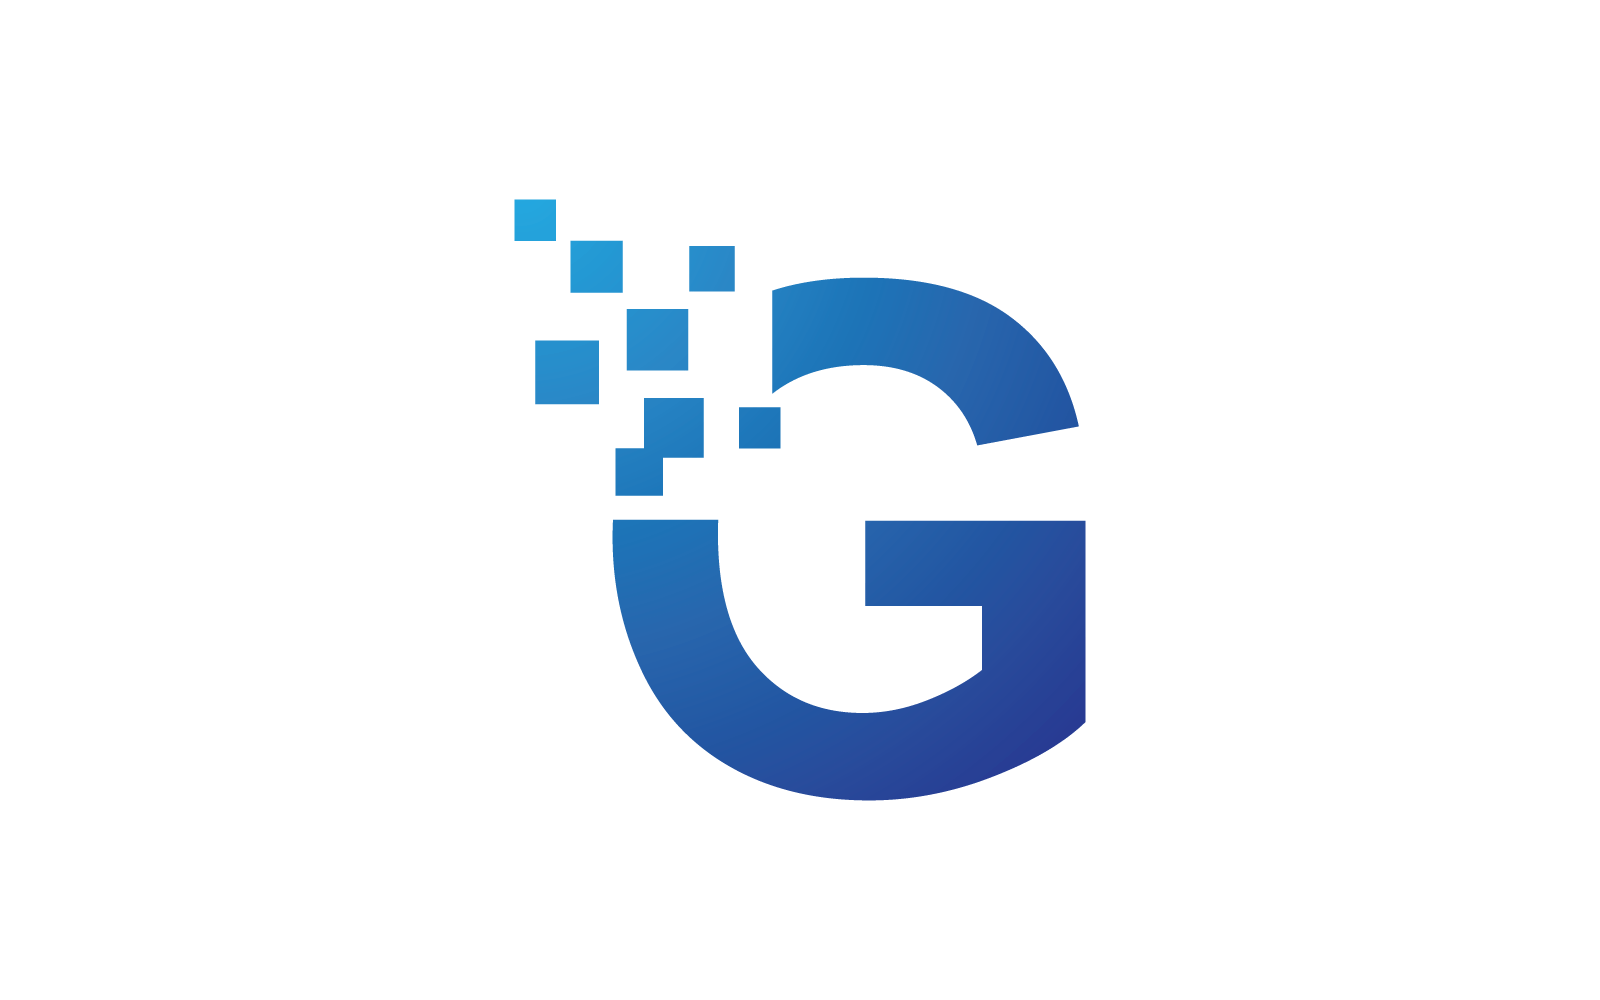 G Initial letter alphabet pixel style logo vector design